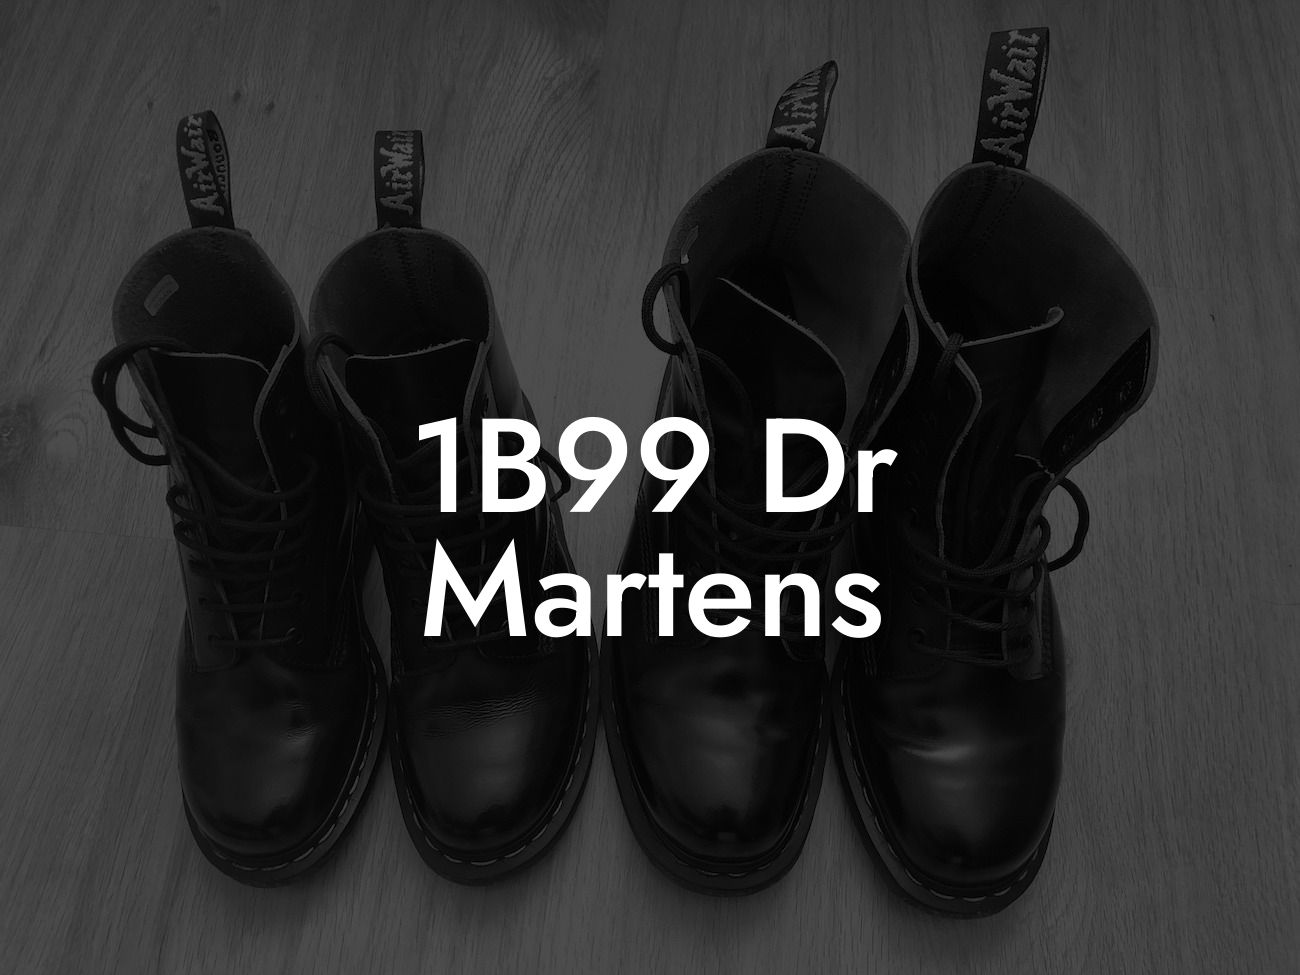 1B99 Dr Martens